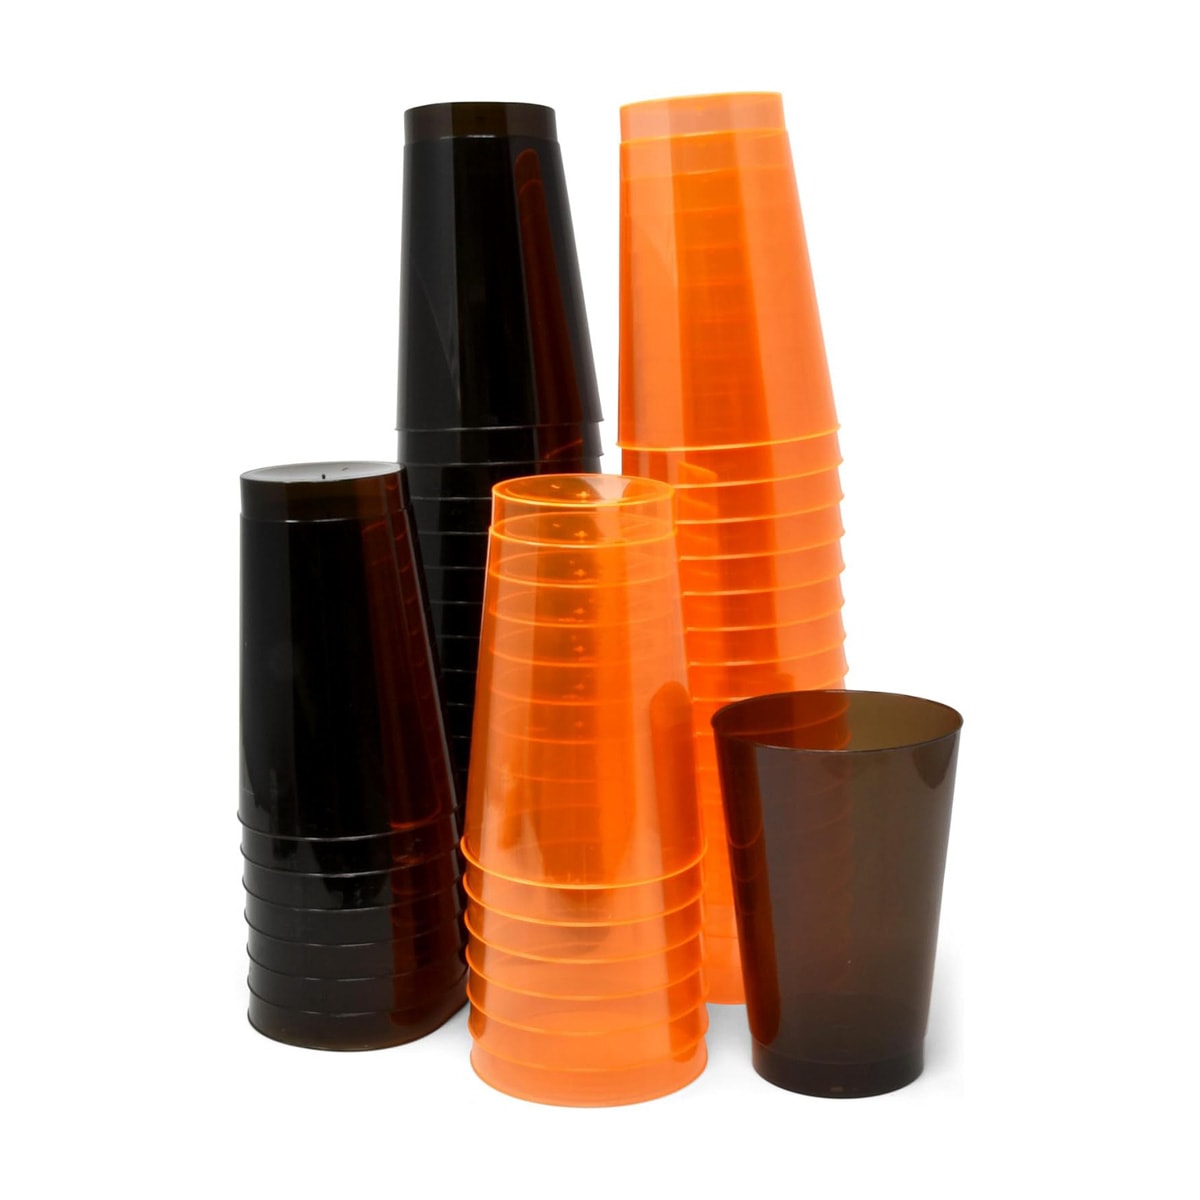 Disposable plastic Halloween cups.